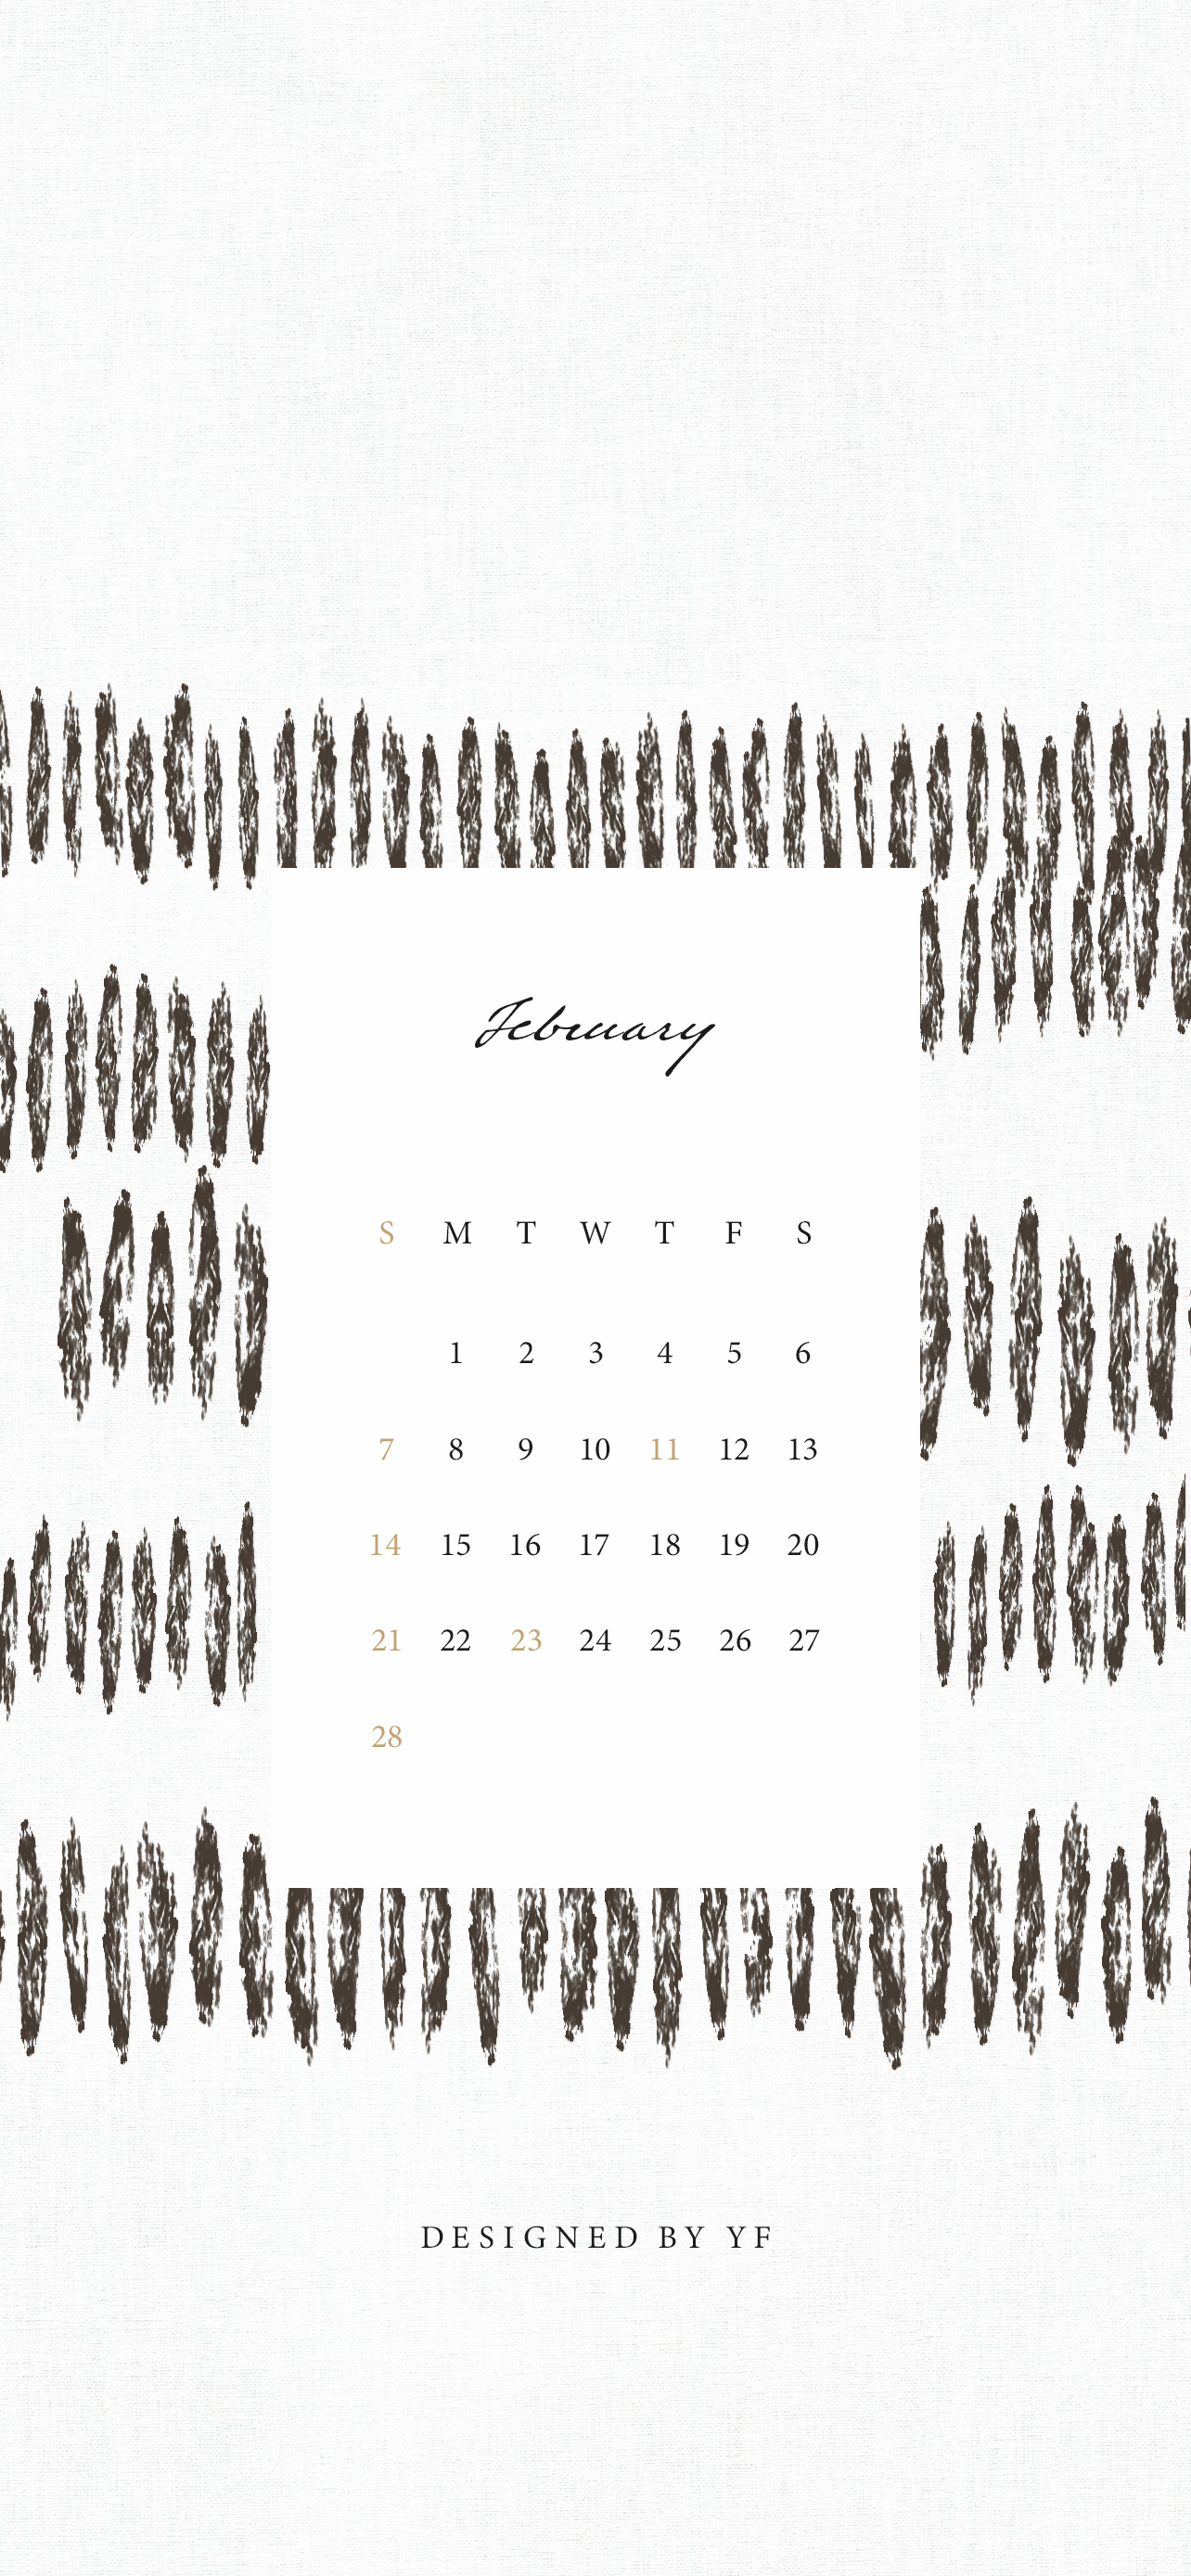 February 21 Calendar Wallpaper For The Iphone Design By Yf